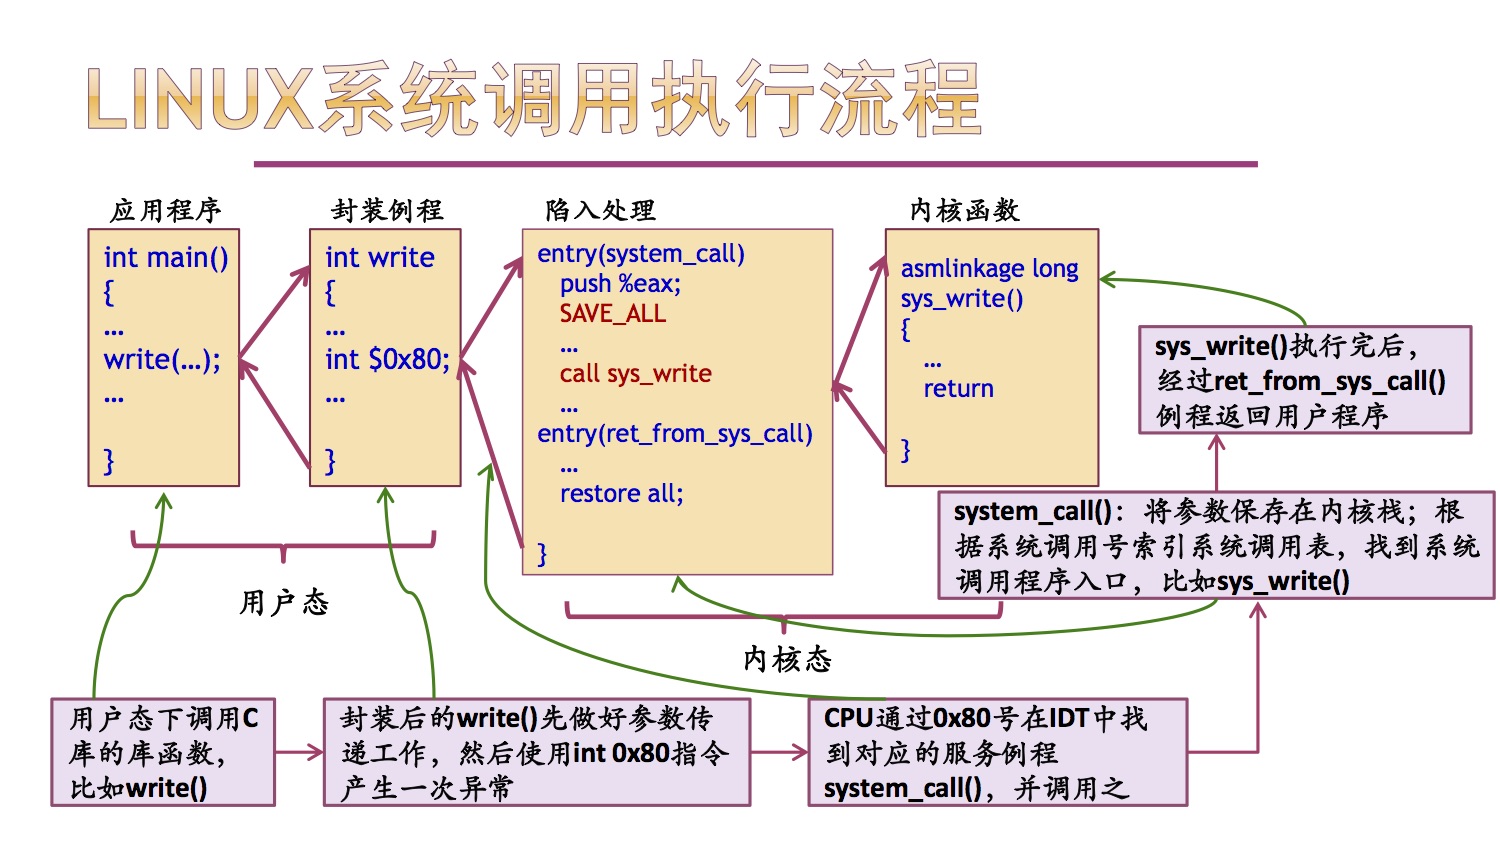 kali linux渗透测试技术详解 pdf_cocos2d-x手机游戏开发与项目实战详解_宋宝华linux设备驱动开发详解：基于最新的linux4.0